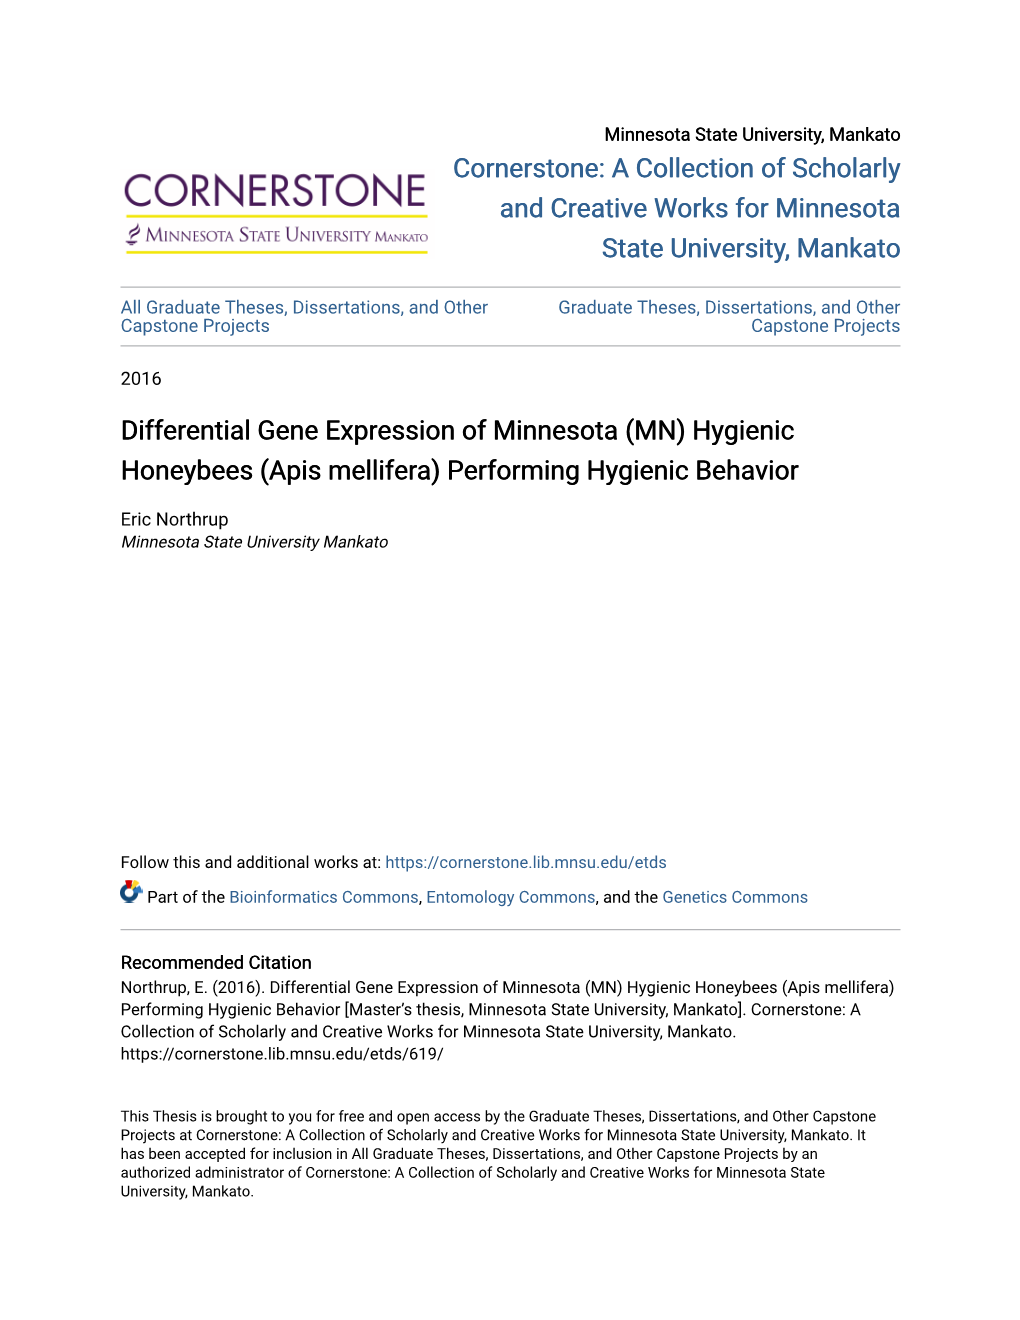 Differential Gene Expression of Minnesota (MN) Hygienic Honeybees (Apis Mellifera) Performing Hygienic Behavior